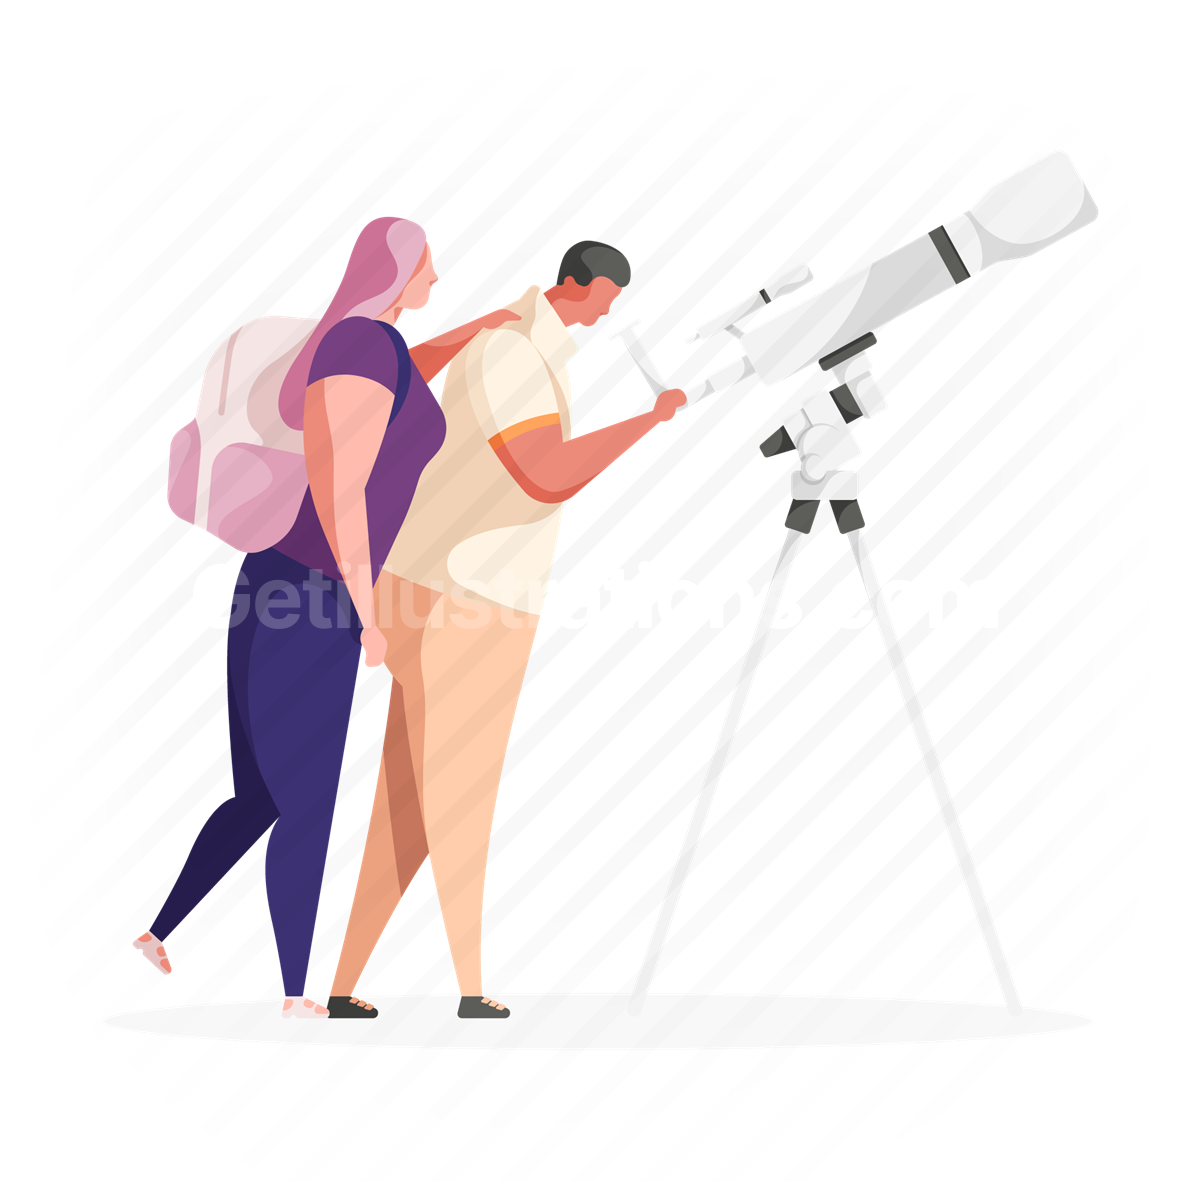 man, woman, telescope, backpack